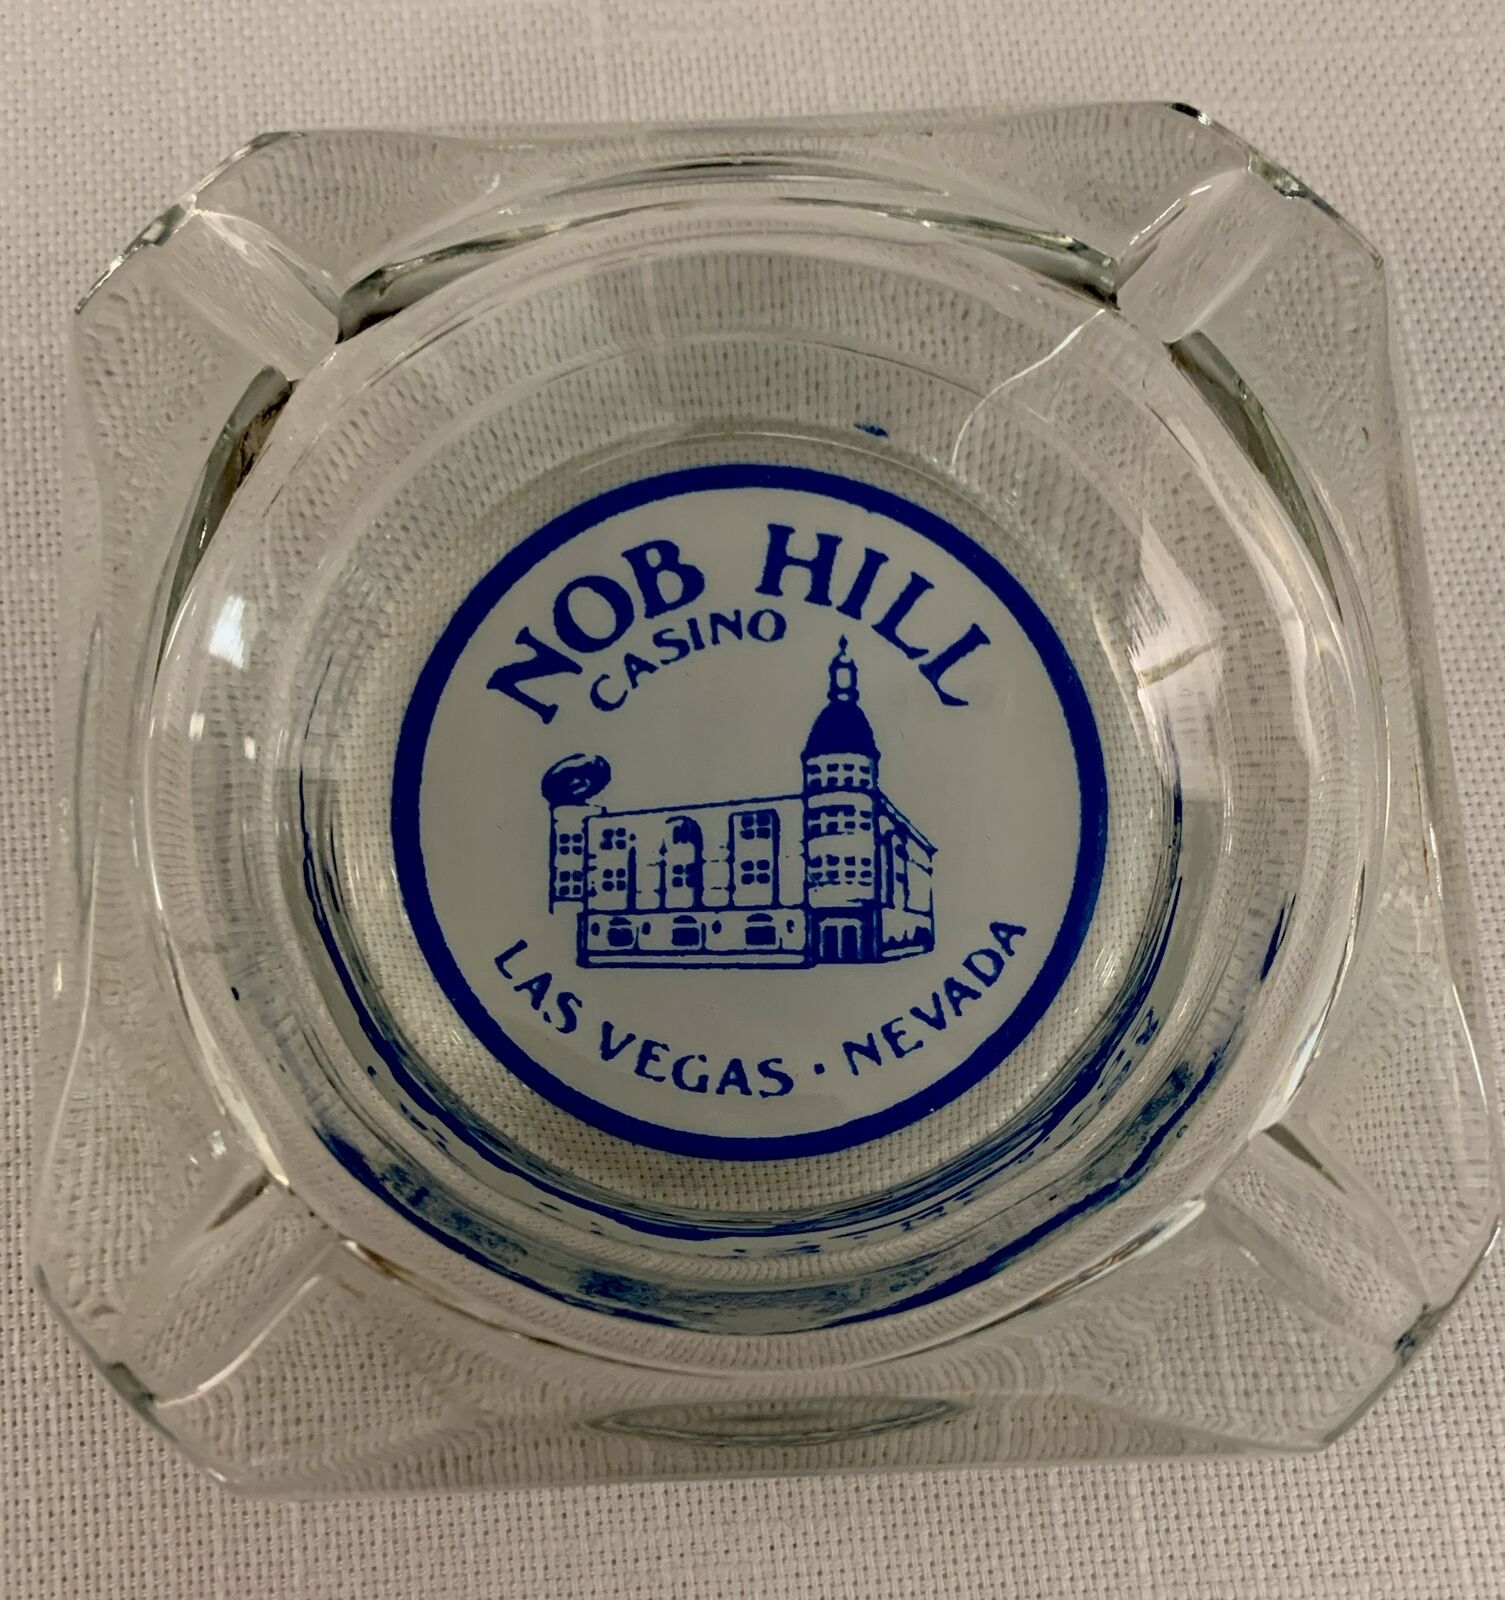 Vintage 1979/90 Nob Hill Casino Square Glass Ashtray Las Vegas Nevada (DR19)